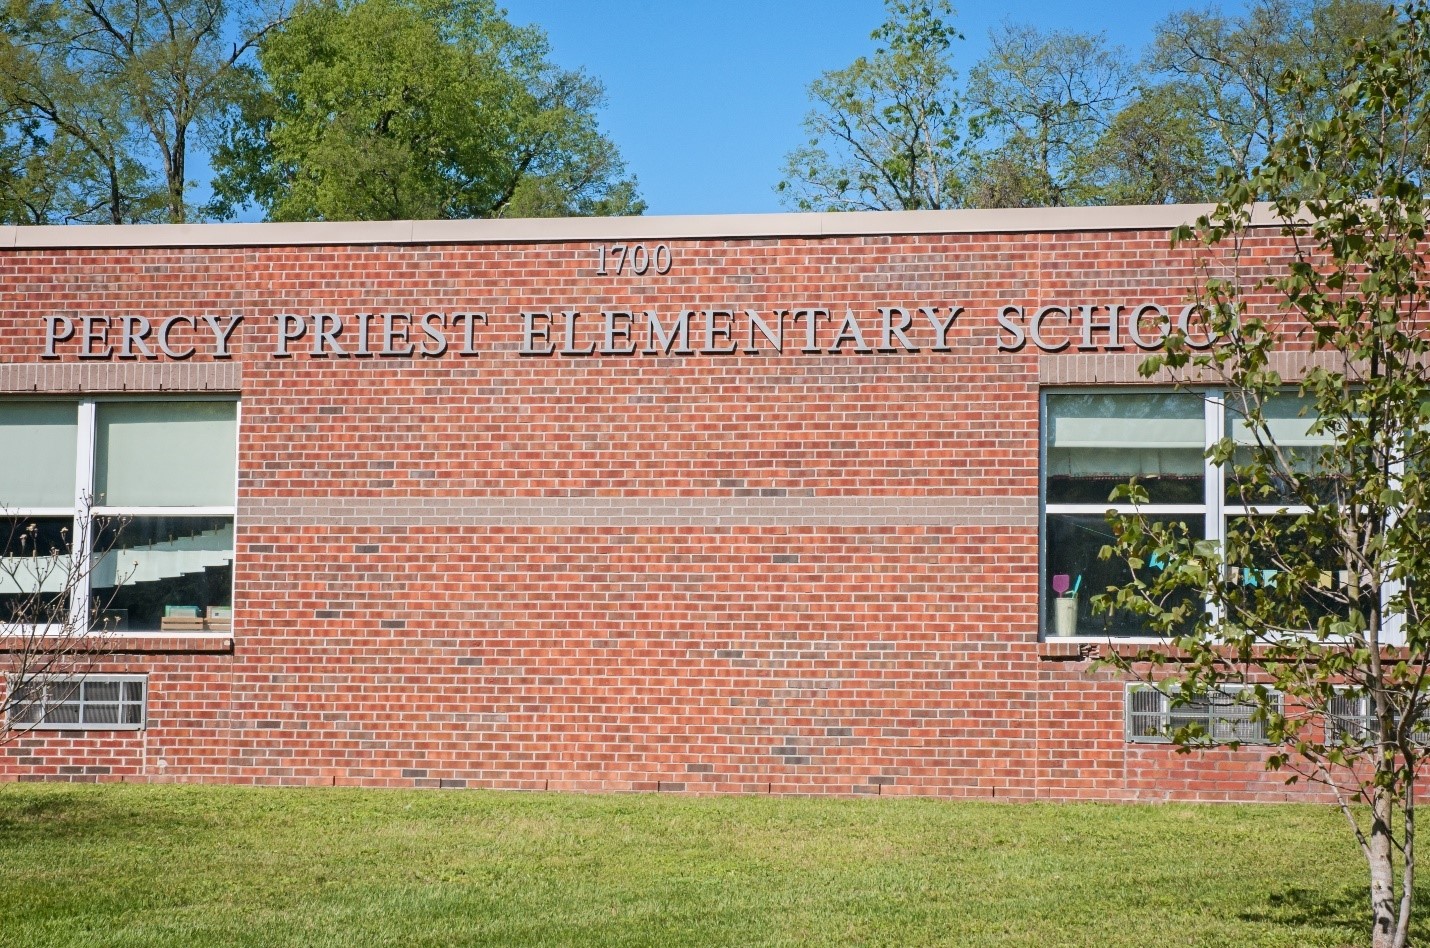 Percy Priest Elementary